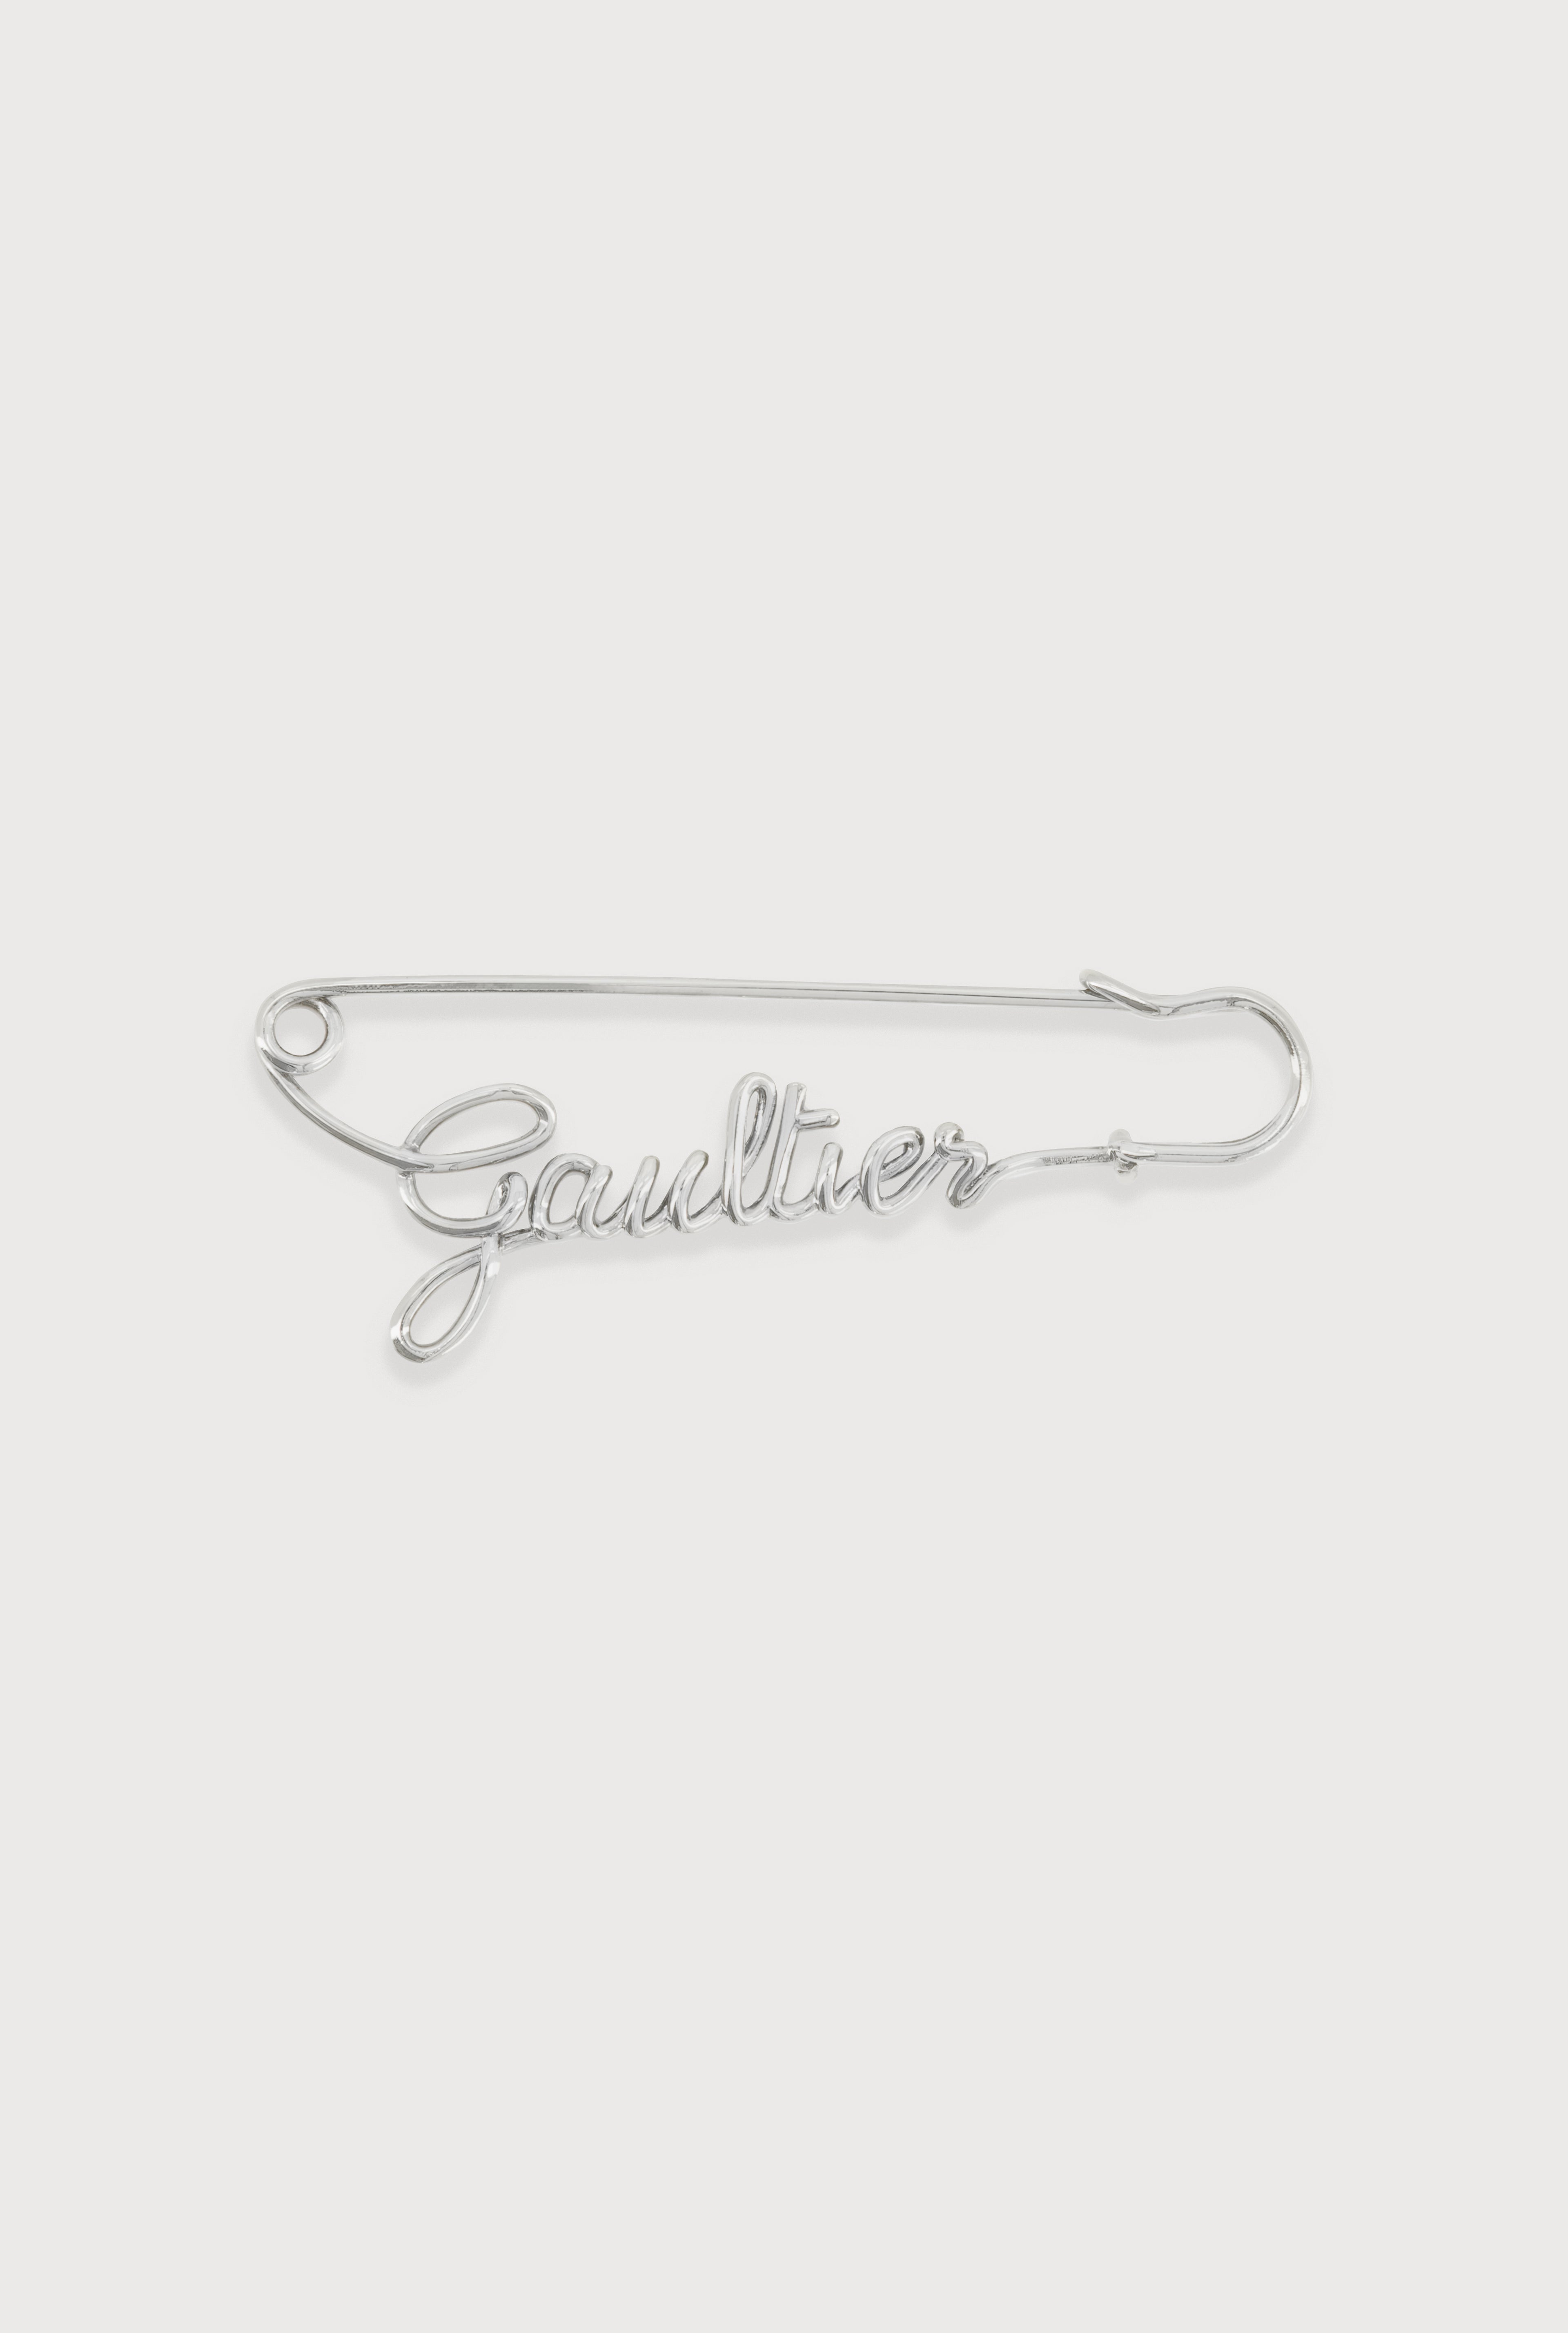 The Silver-Tone Gaultier Brooch